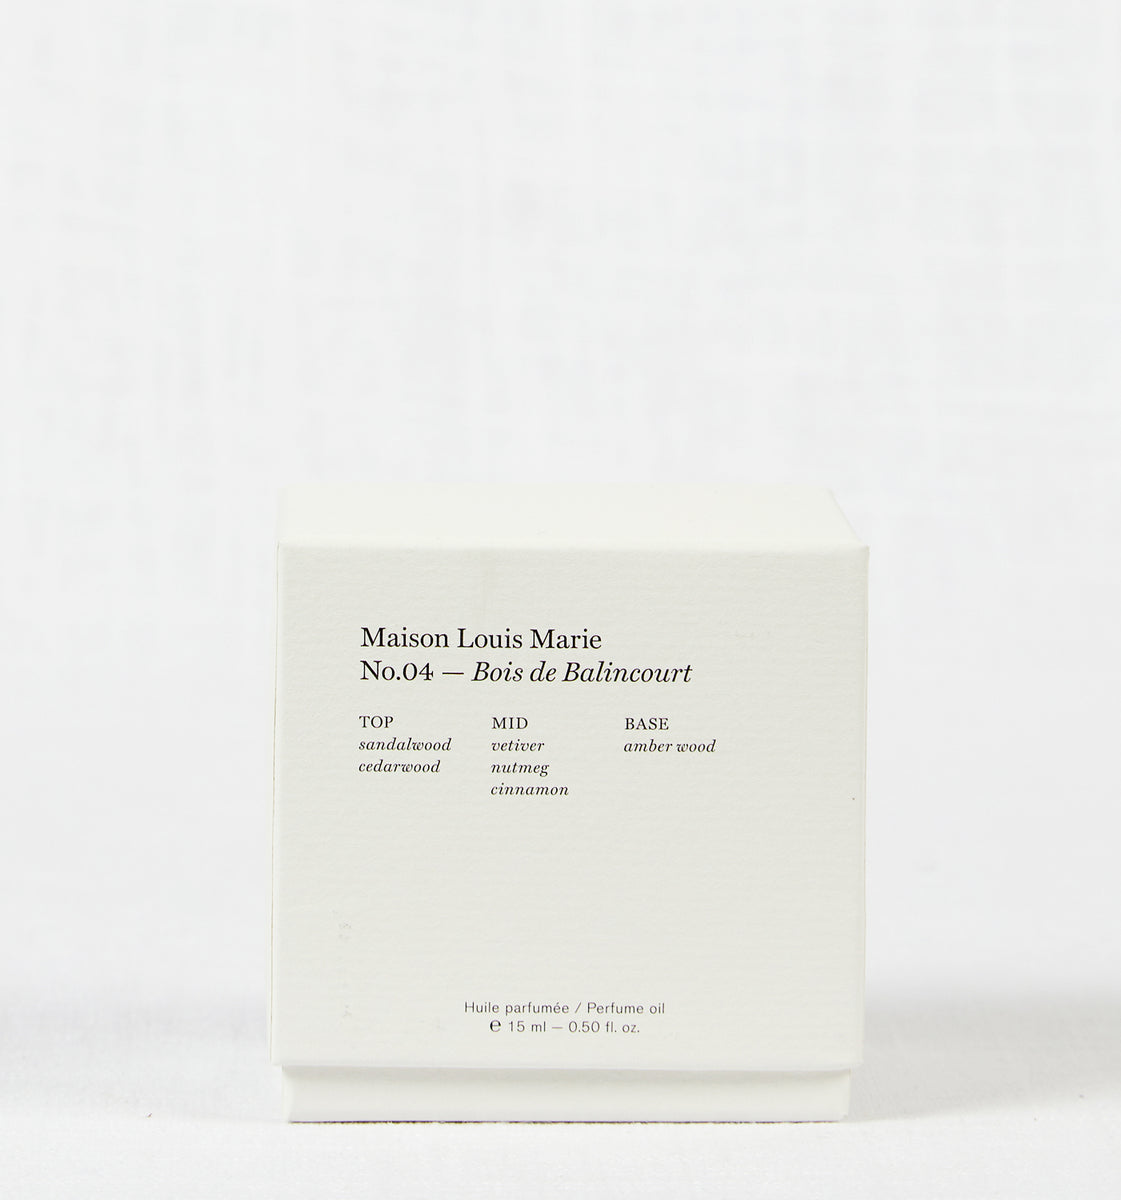 Maison Louis Marie Perfume Oil – take heart shop